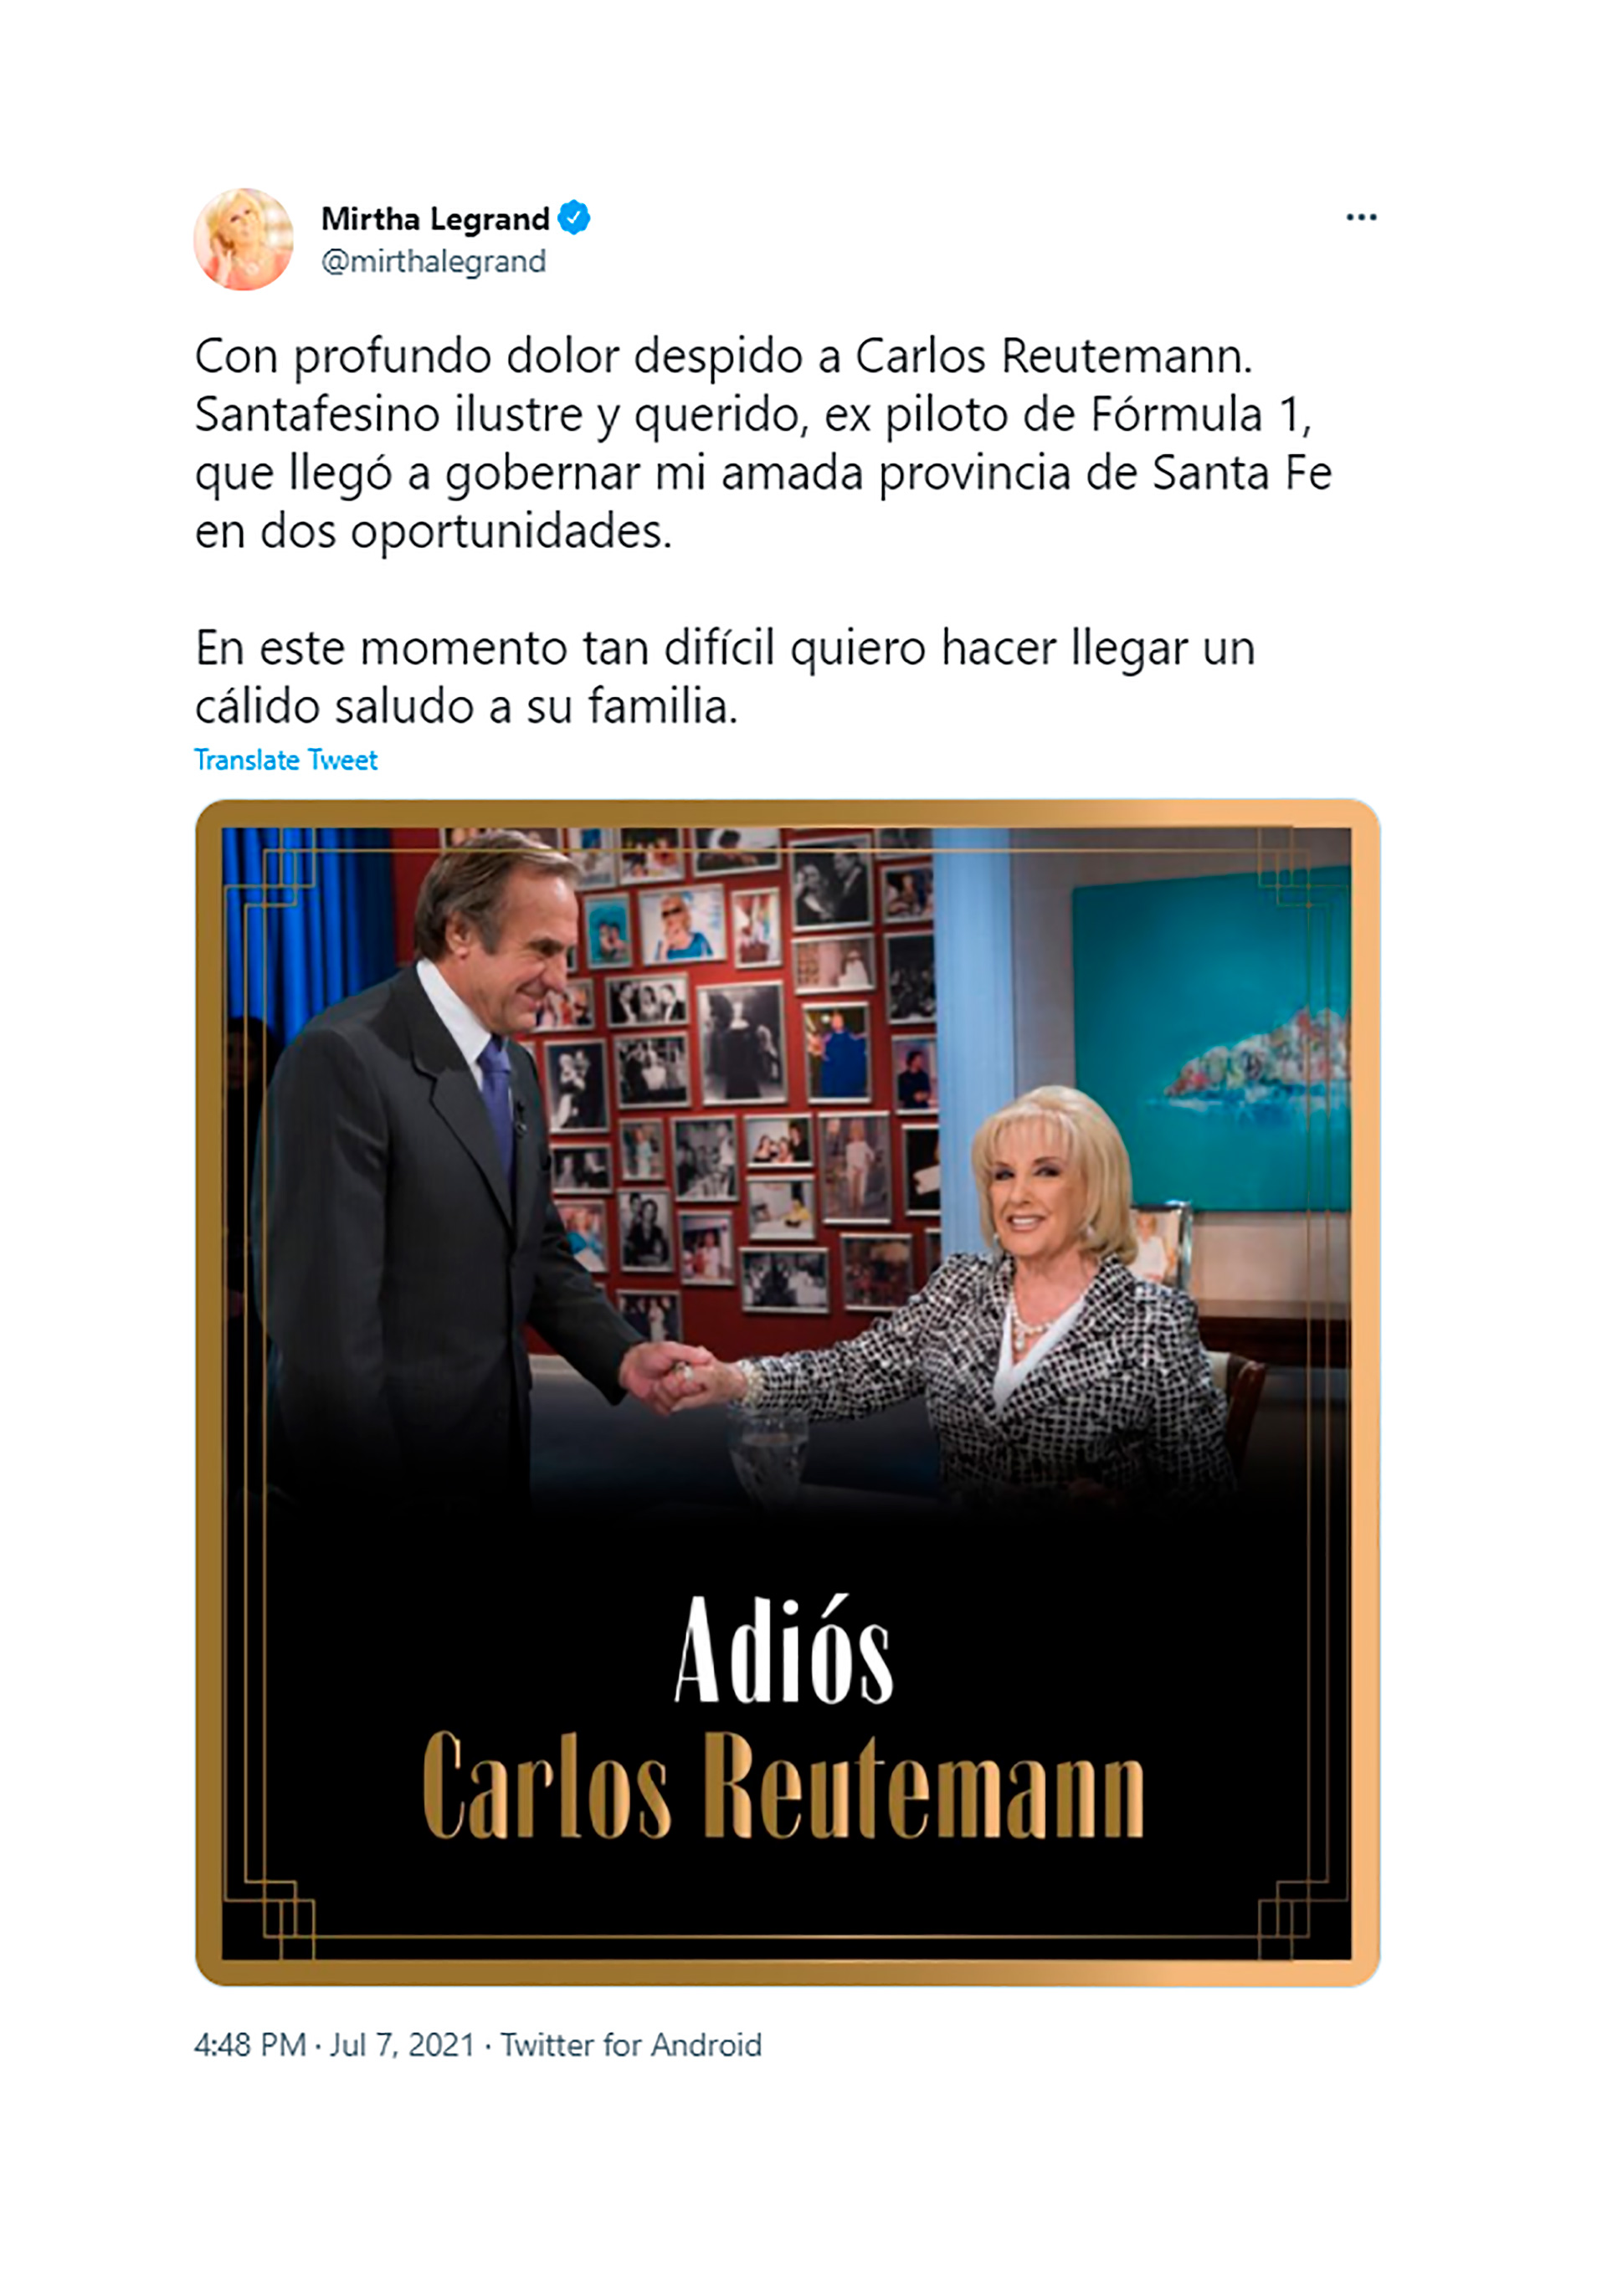 El tweet de Mirtha Legrand para despedir a Carlos Reutemann